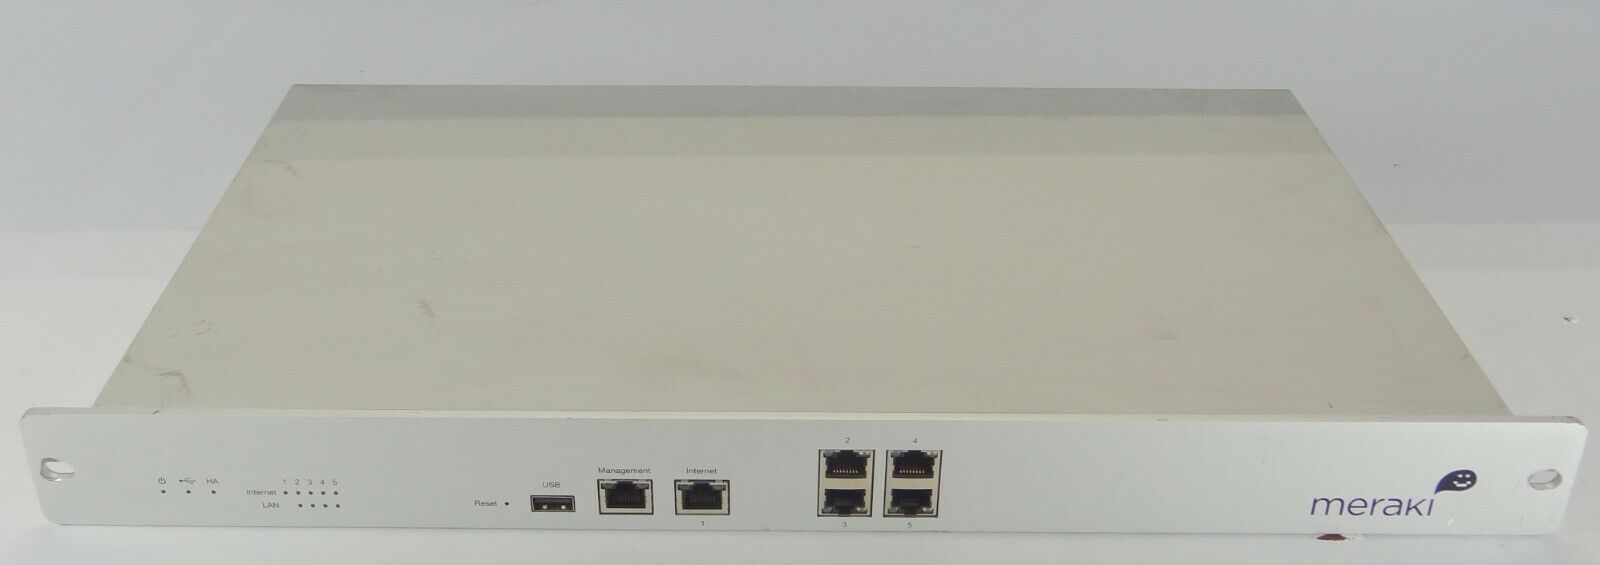 Cisco Meraki MX80 Security Appliance 250Mbps 5xGbE Ports